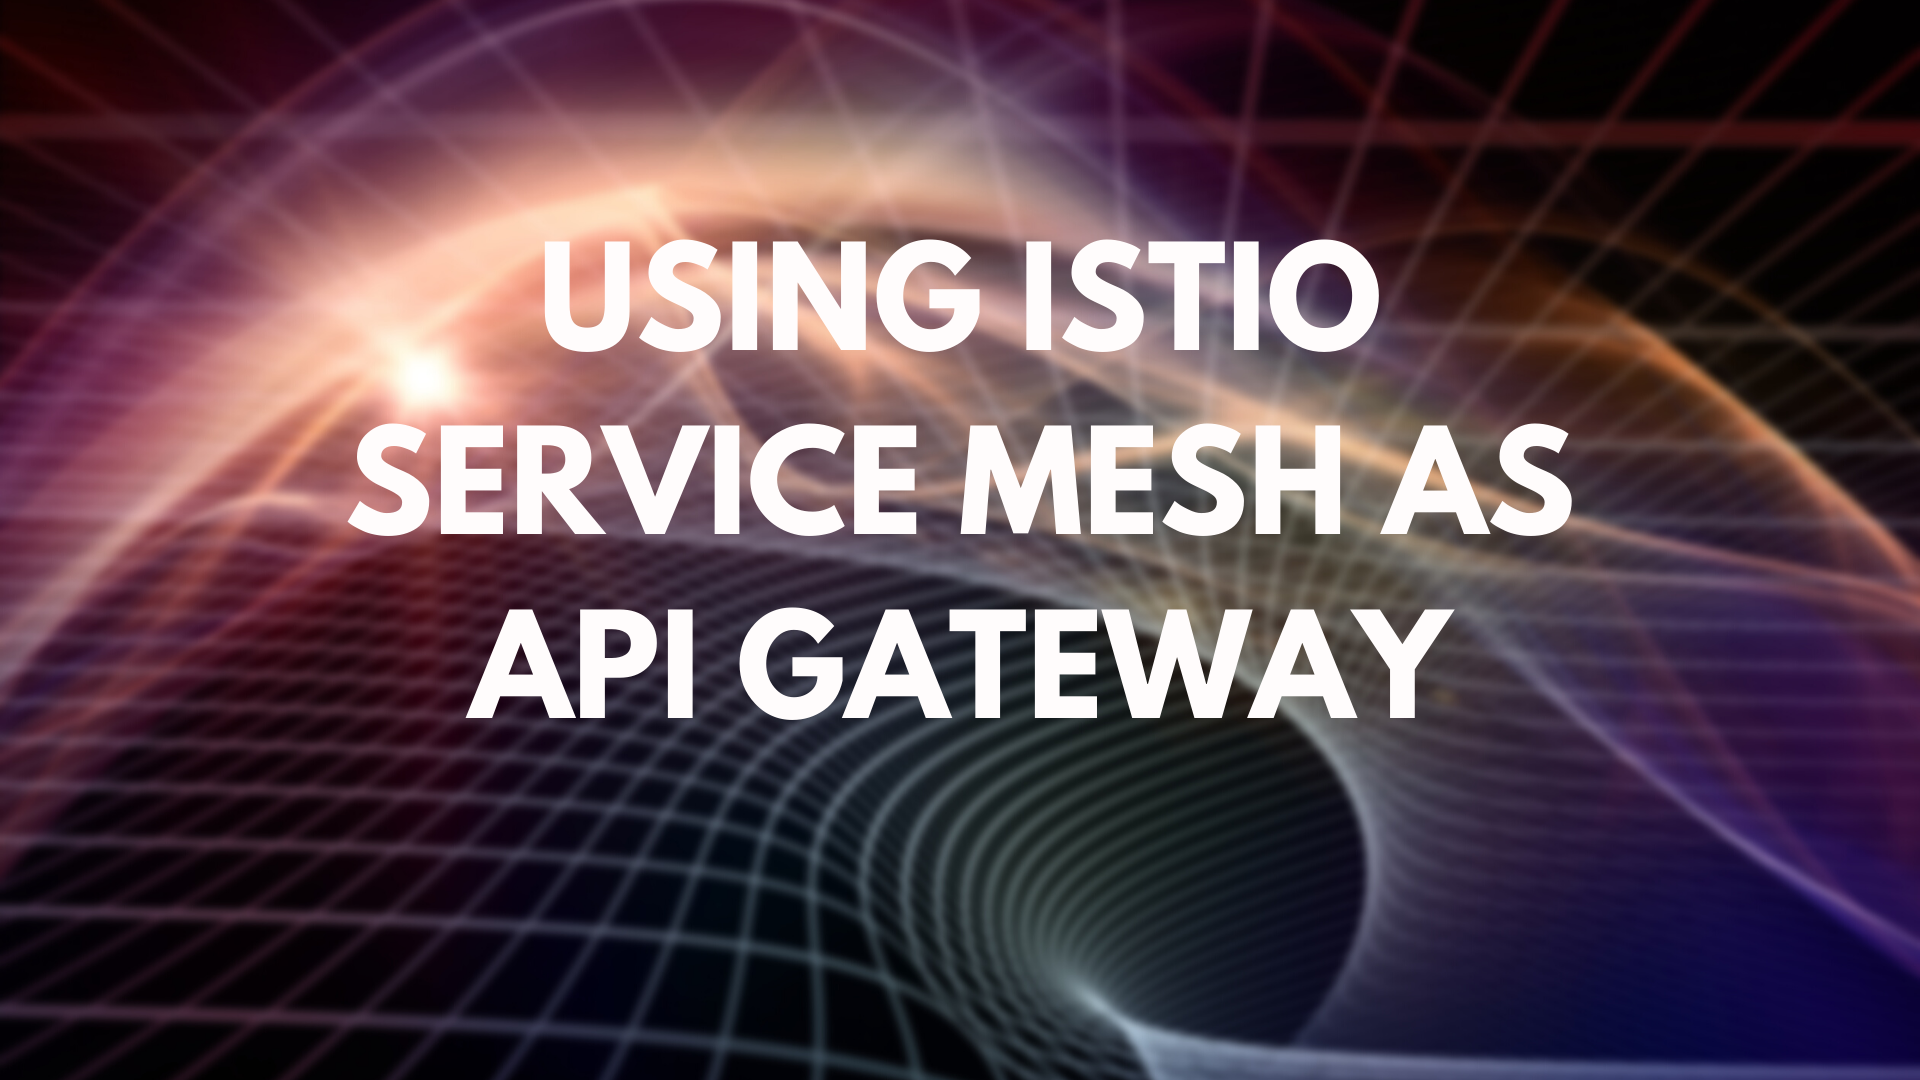 Istio Service Mesh as API Gateway